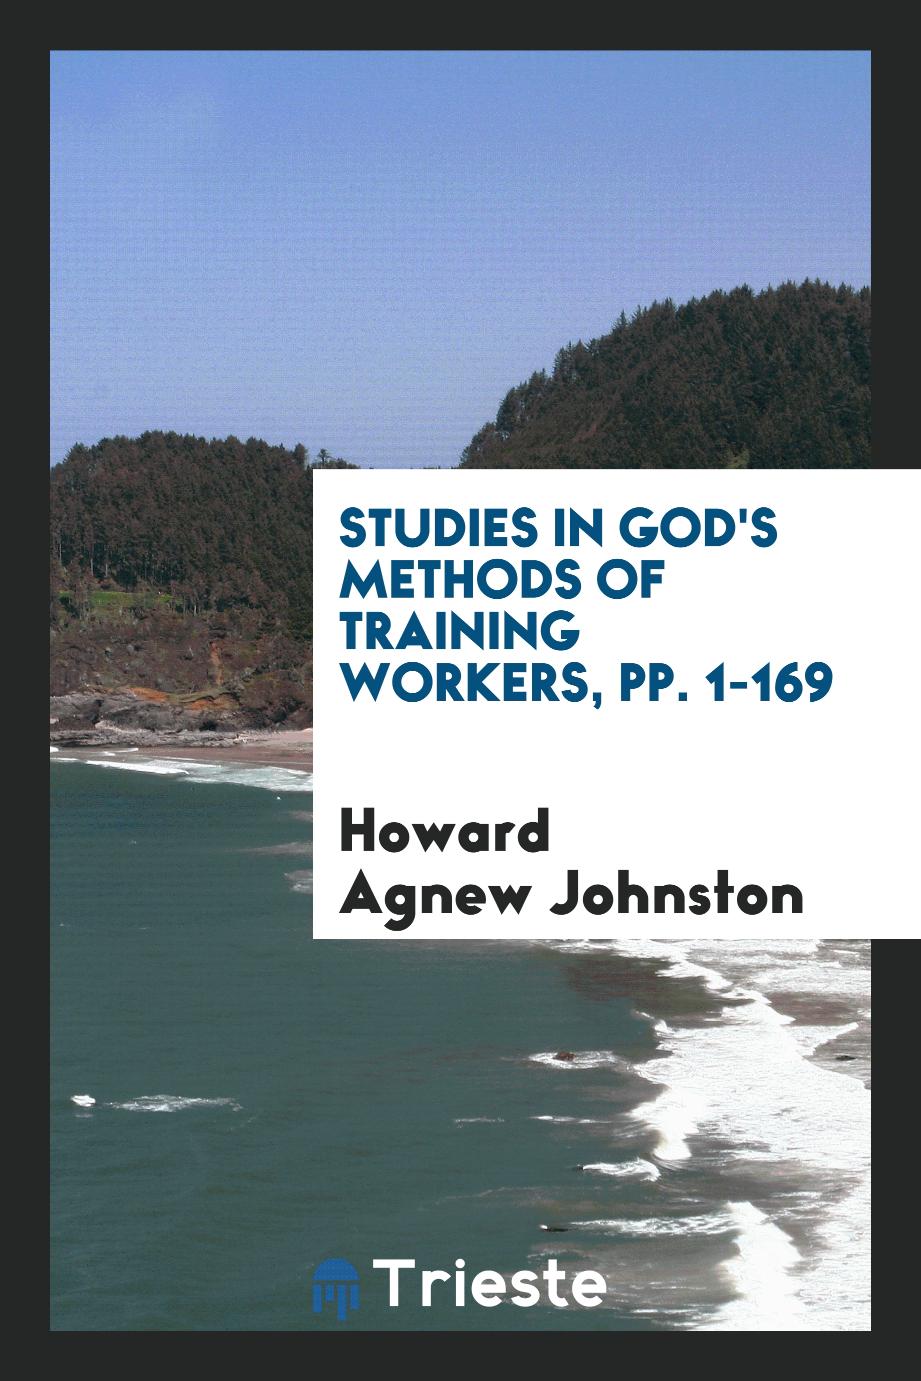 Studies in God's Methods of Training Workers, pp. 1-169